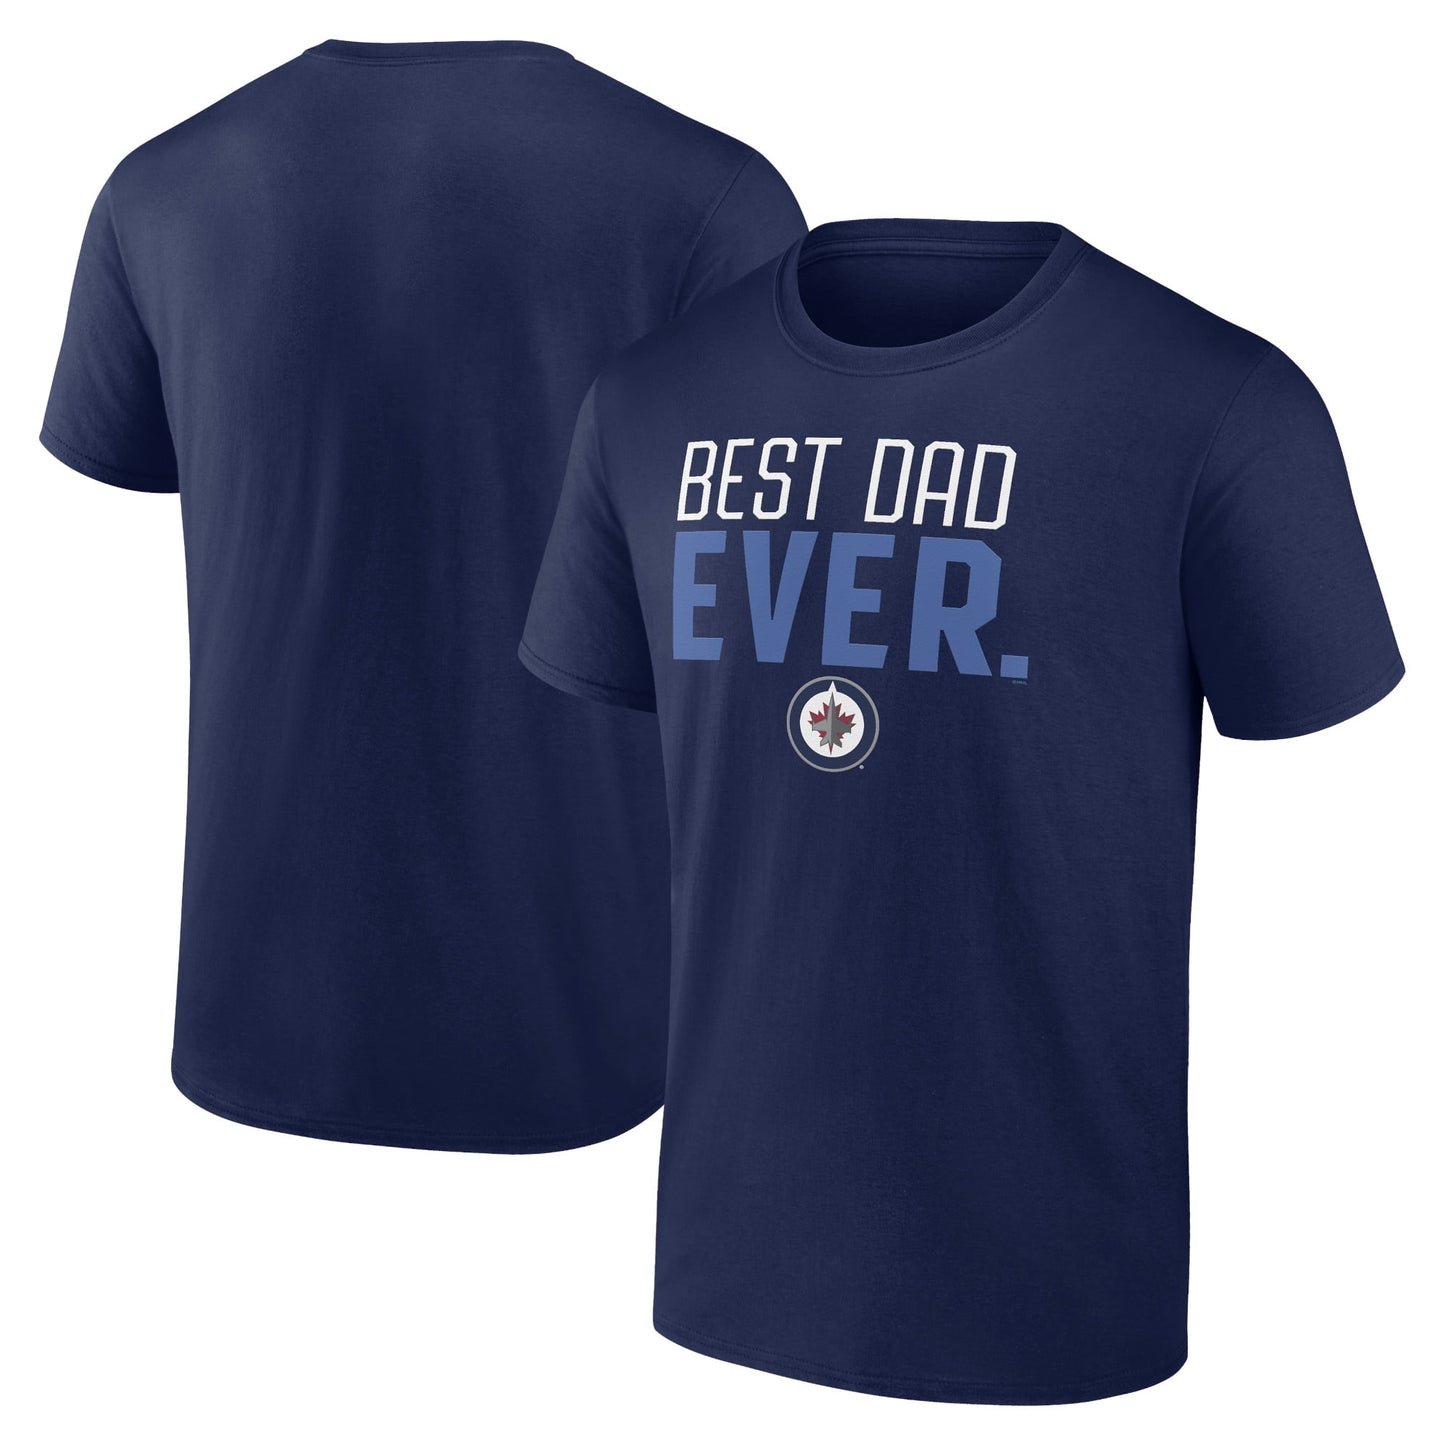 Men's Fanatics Branded Navy Winnipeg Jets Best Dad Ever T-Shirt